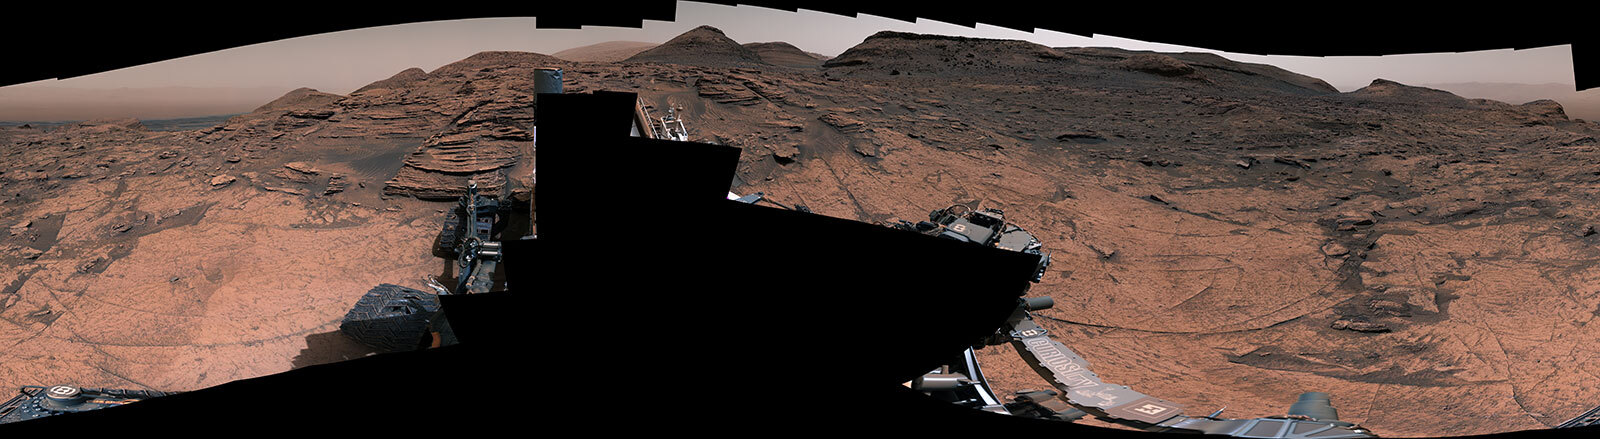 10 Years Since Landing, NASA's Curiosity Mars Rover Still Has Drive